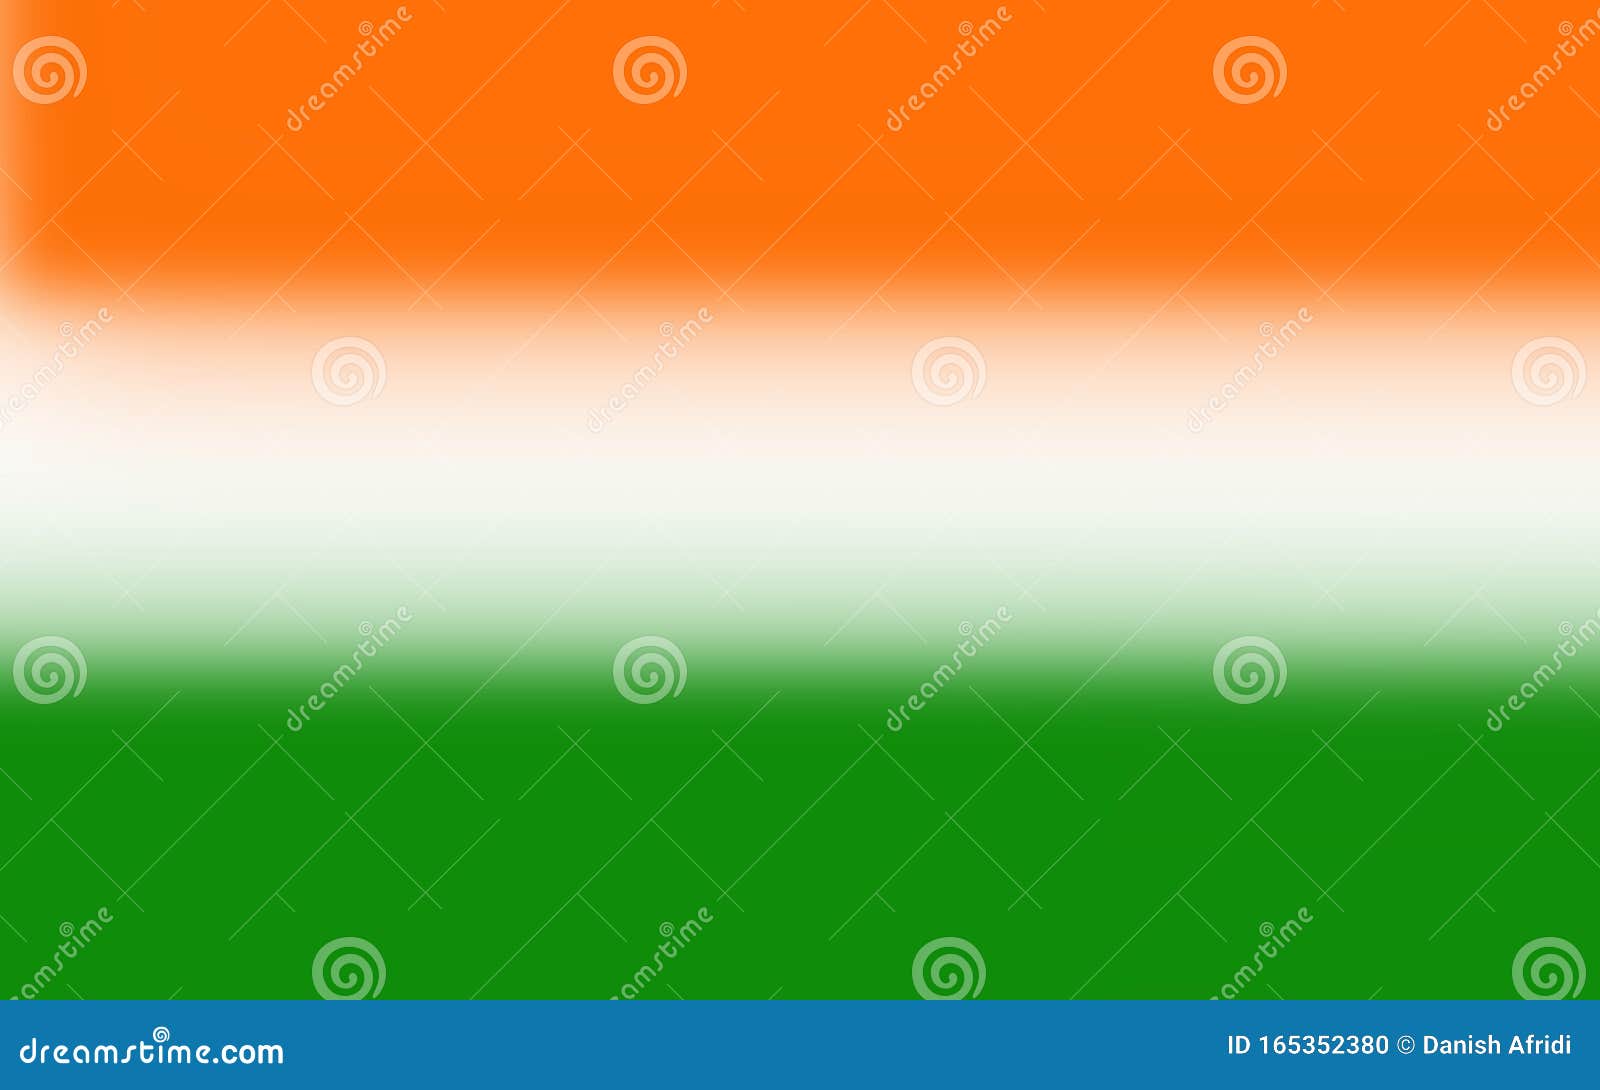 Indian Flag Tiranga Wallpaper Texture and Background Stock Illustration -  Illustration of flag, indian: 165352380